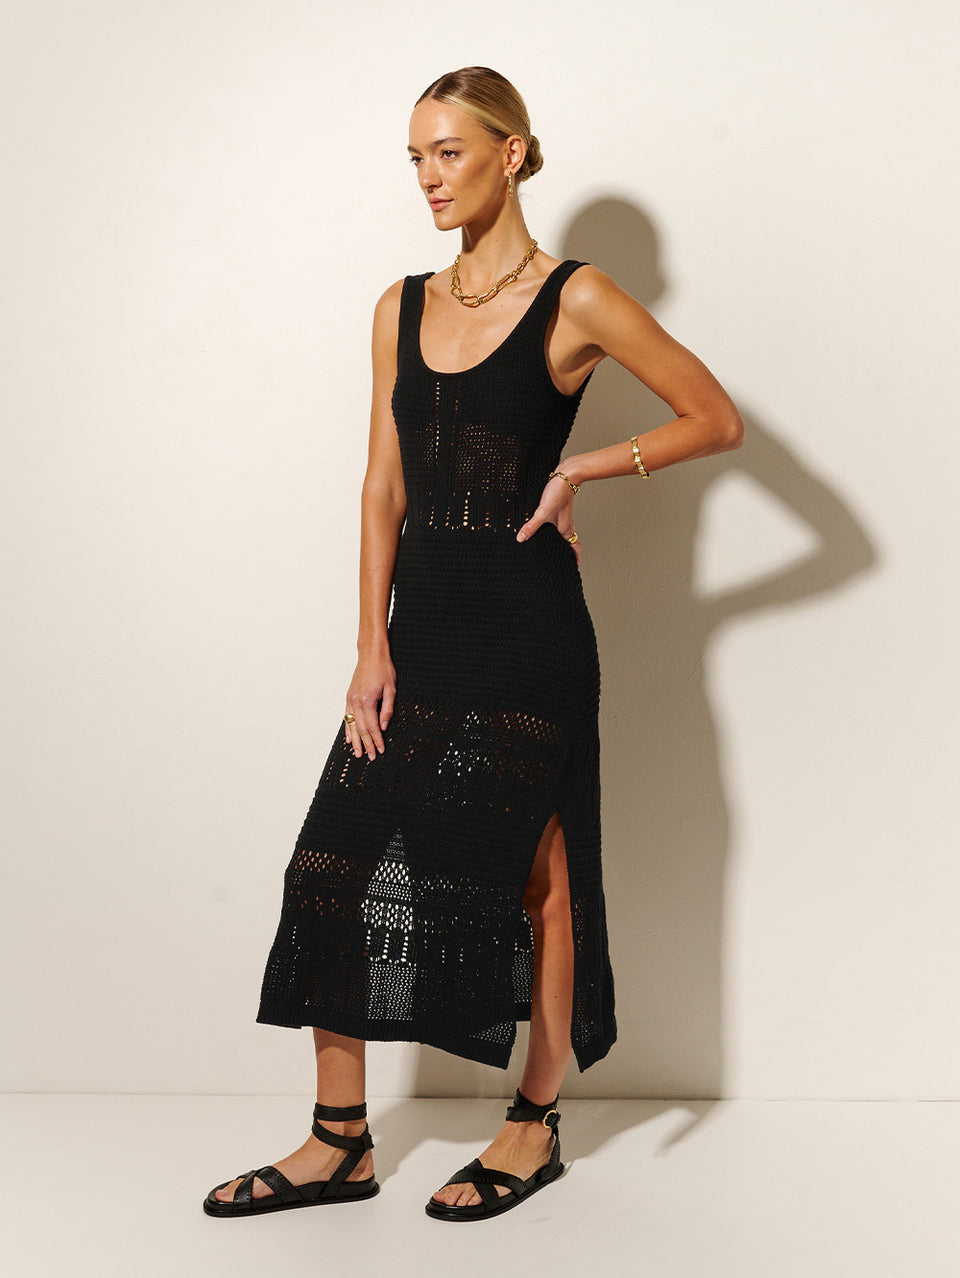 Riza Crochet Midi Dress KIVARI | Model wears black crochet midi dress side view